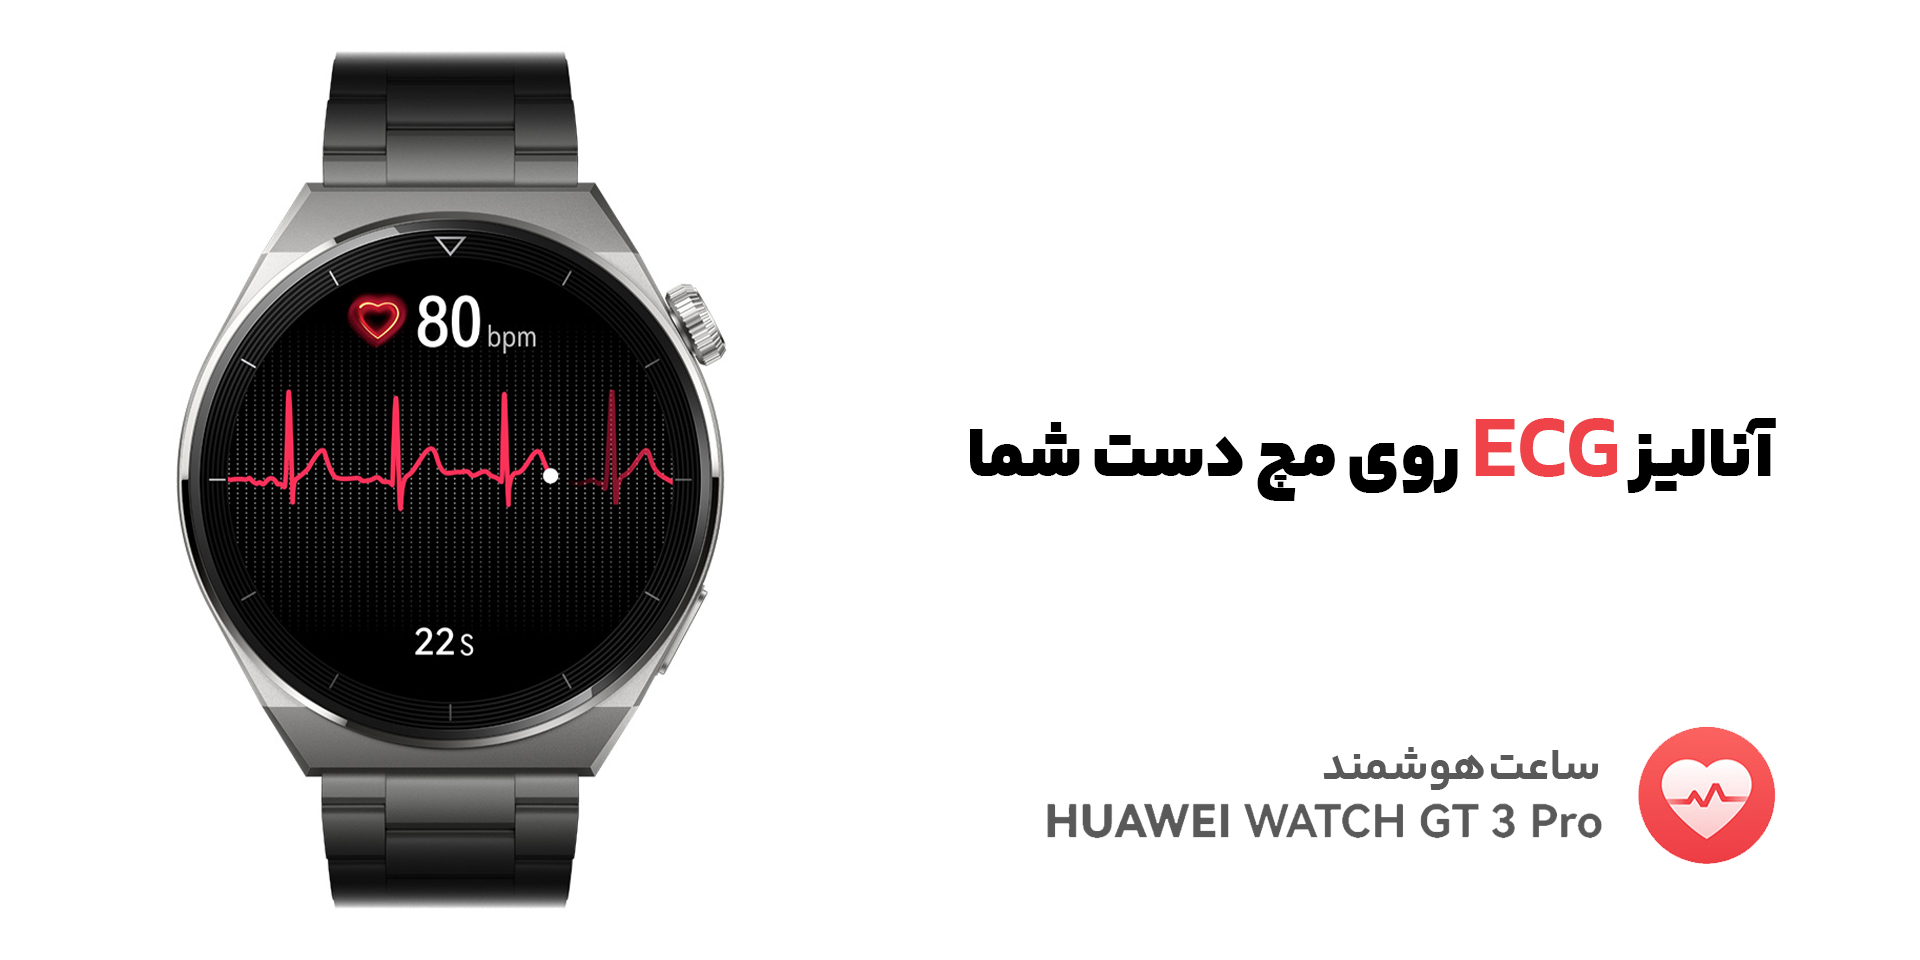 ساعت هوشمند Watch GT 3 Pro، آنالیز ECG روی مچ دست شما